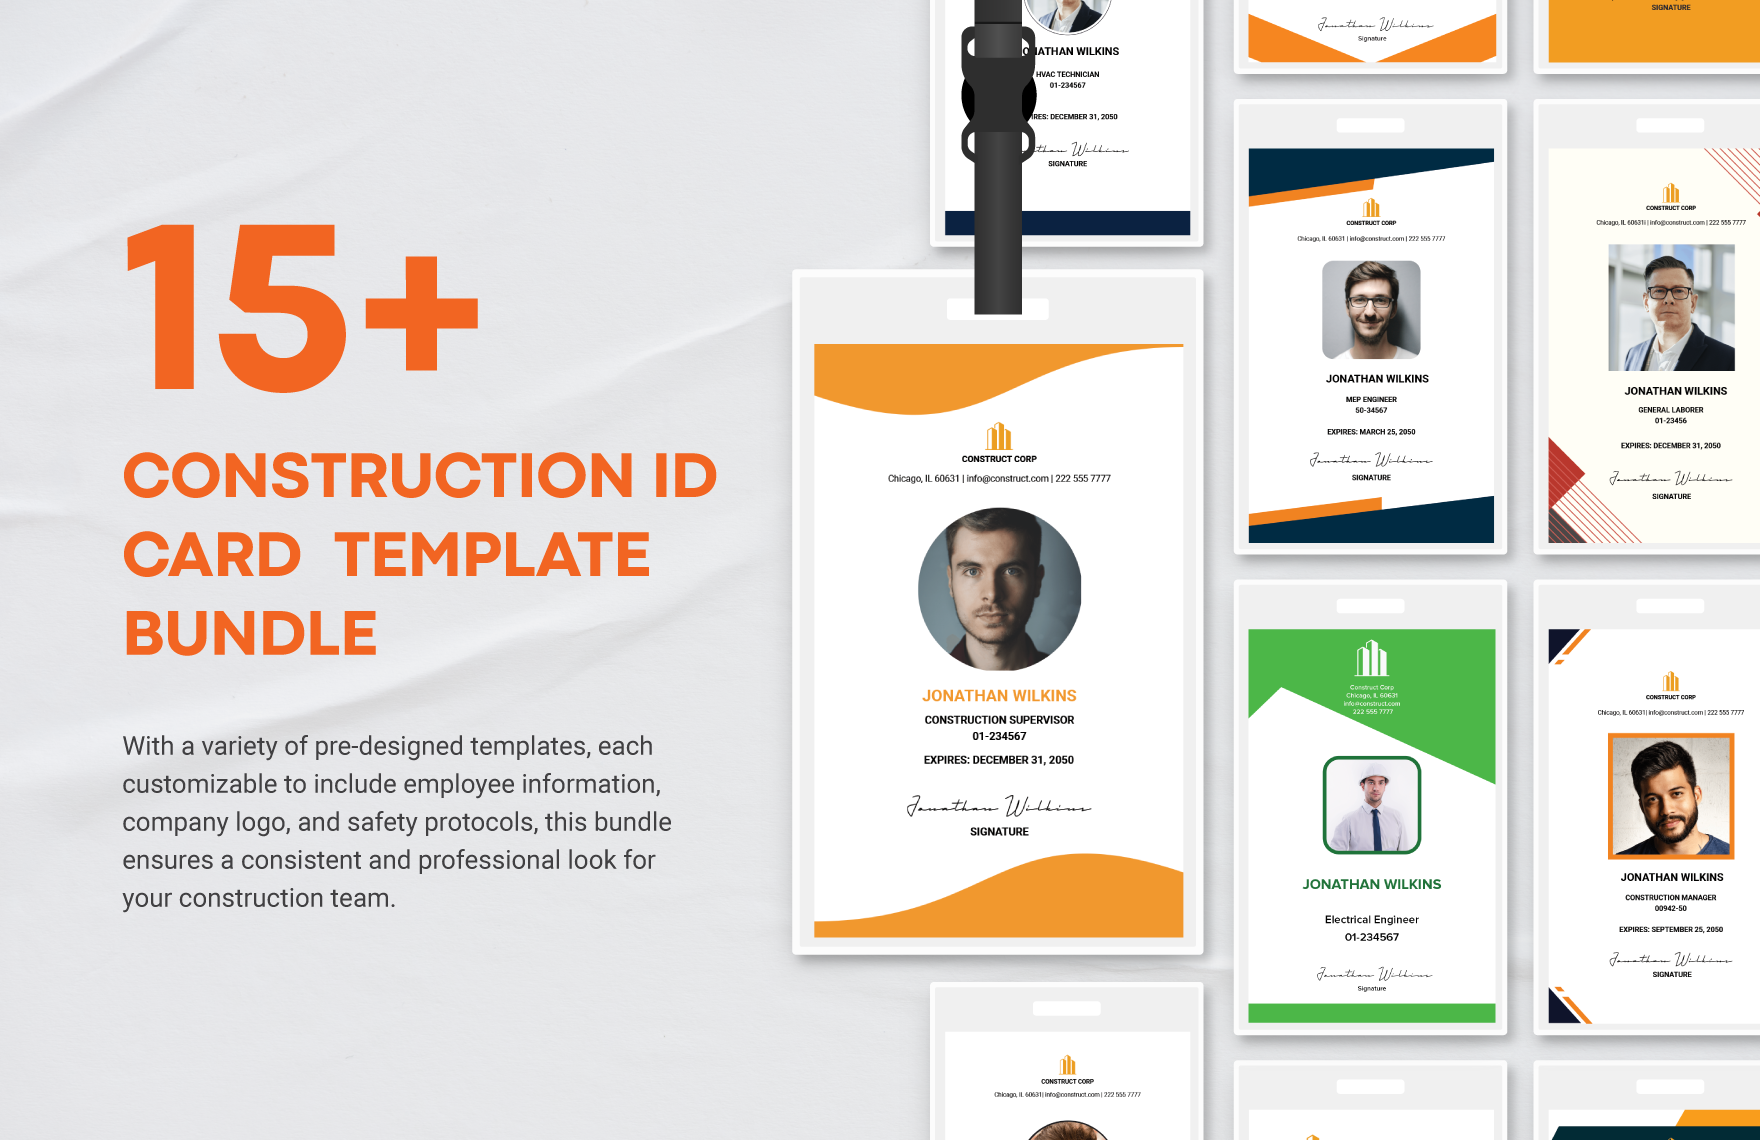 15+ Construction ID Card Template Bundle